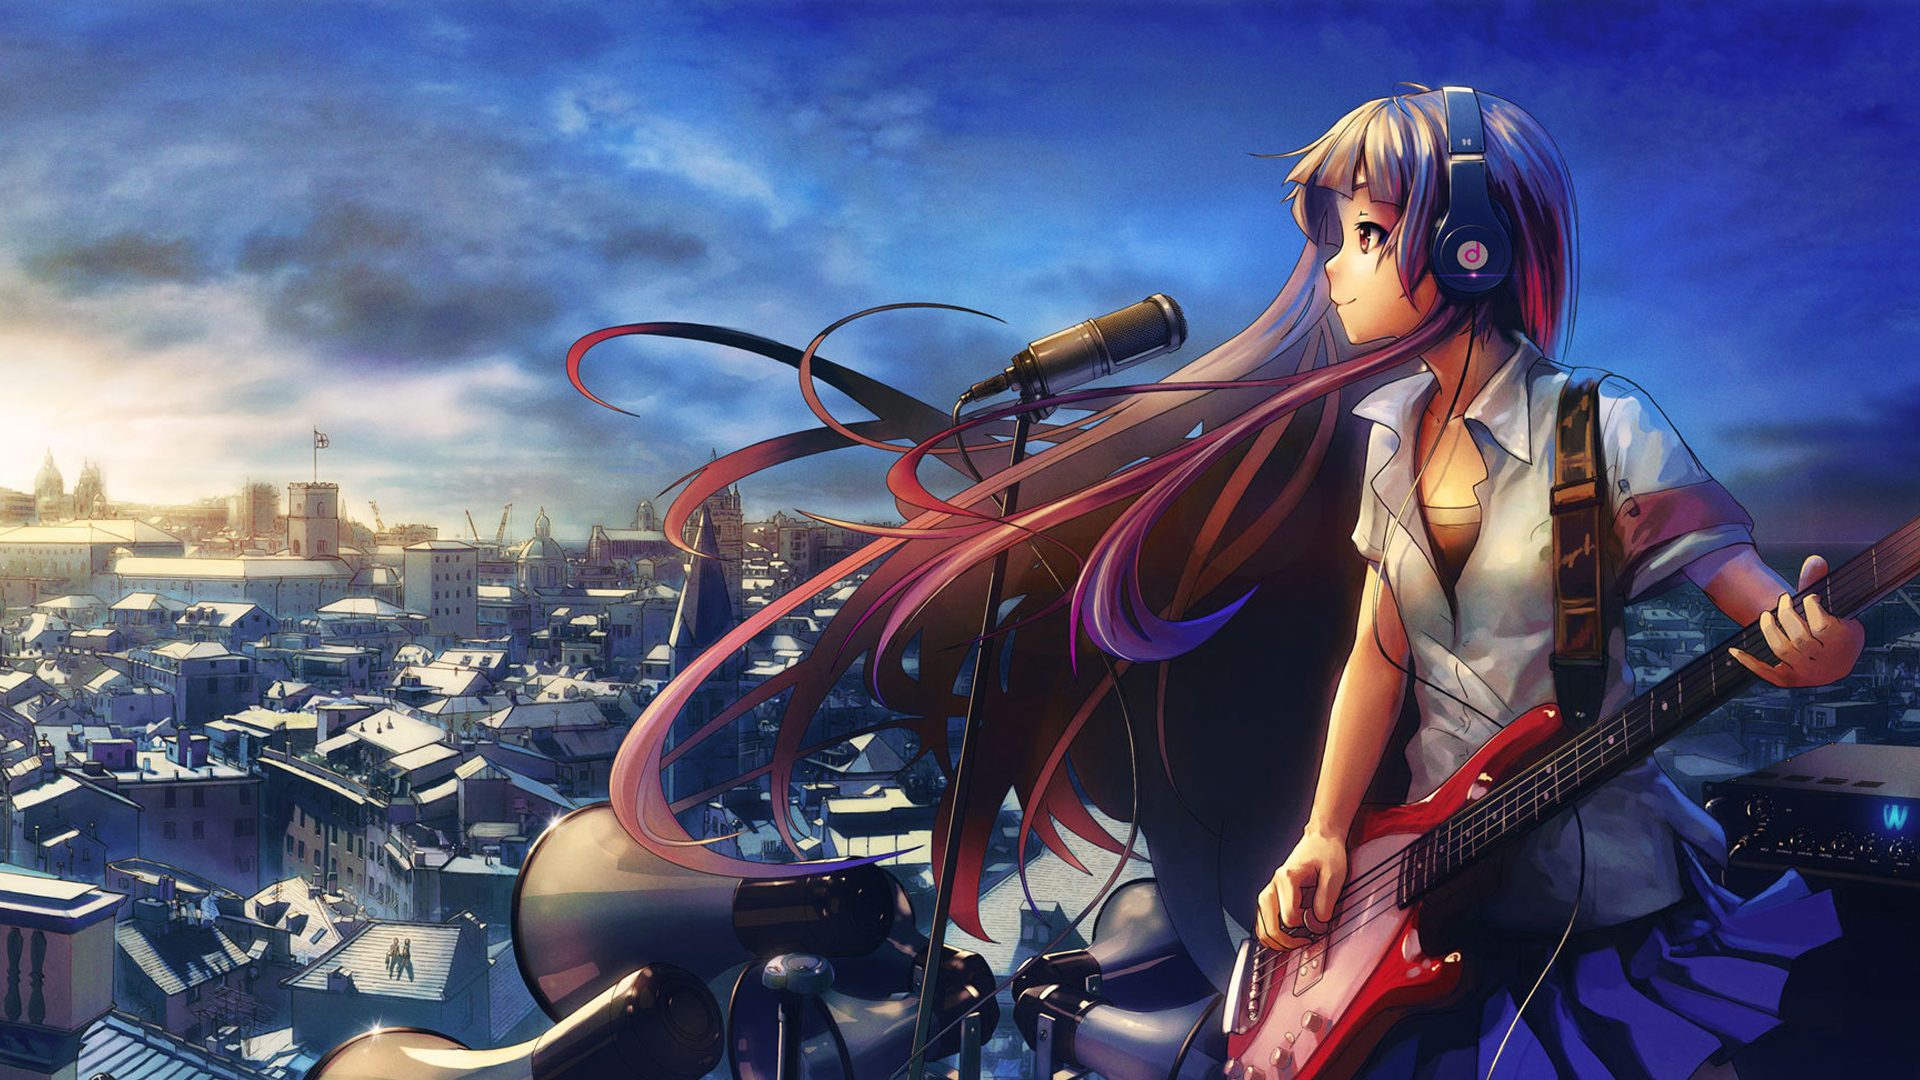 Anime Girl With Guitar Full HD Wallpaper 1080p